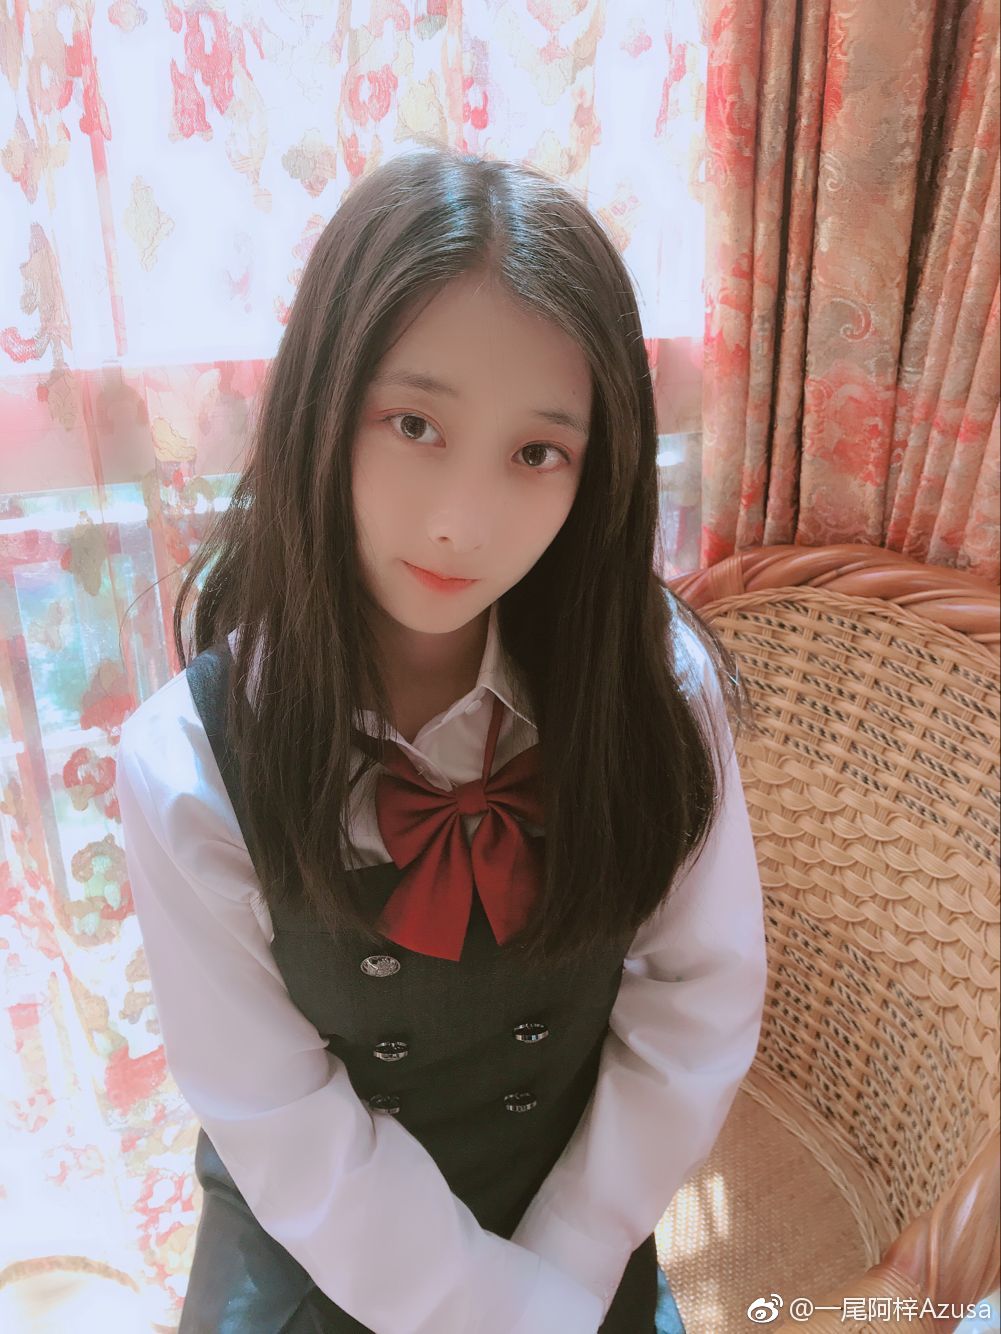 Azusa Weibo may 1510, 2019